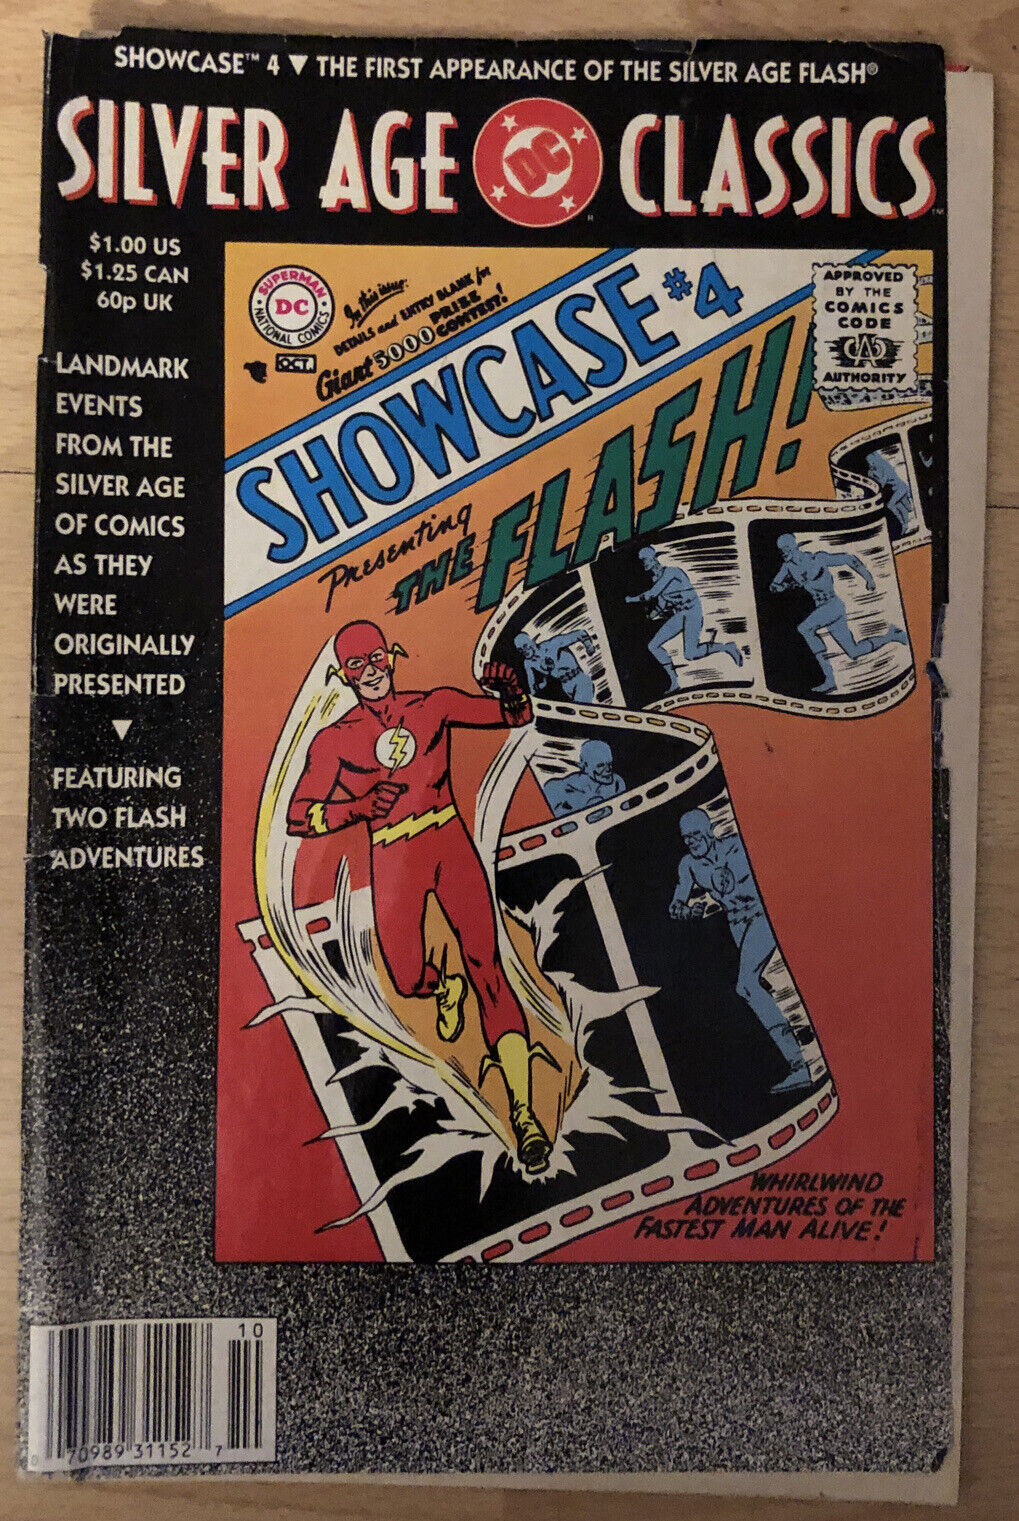 DC Silver Age Classics Showcase #4 1st Flash; Wayne’s World Ad, Newsstand Reader